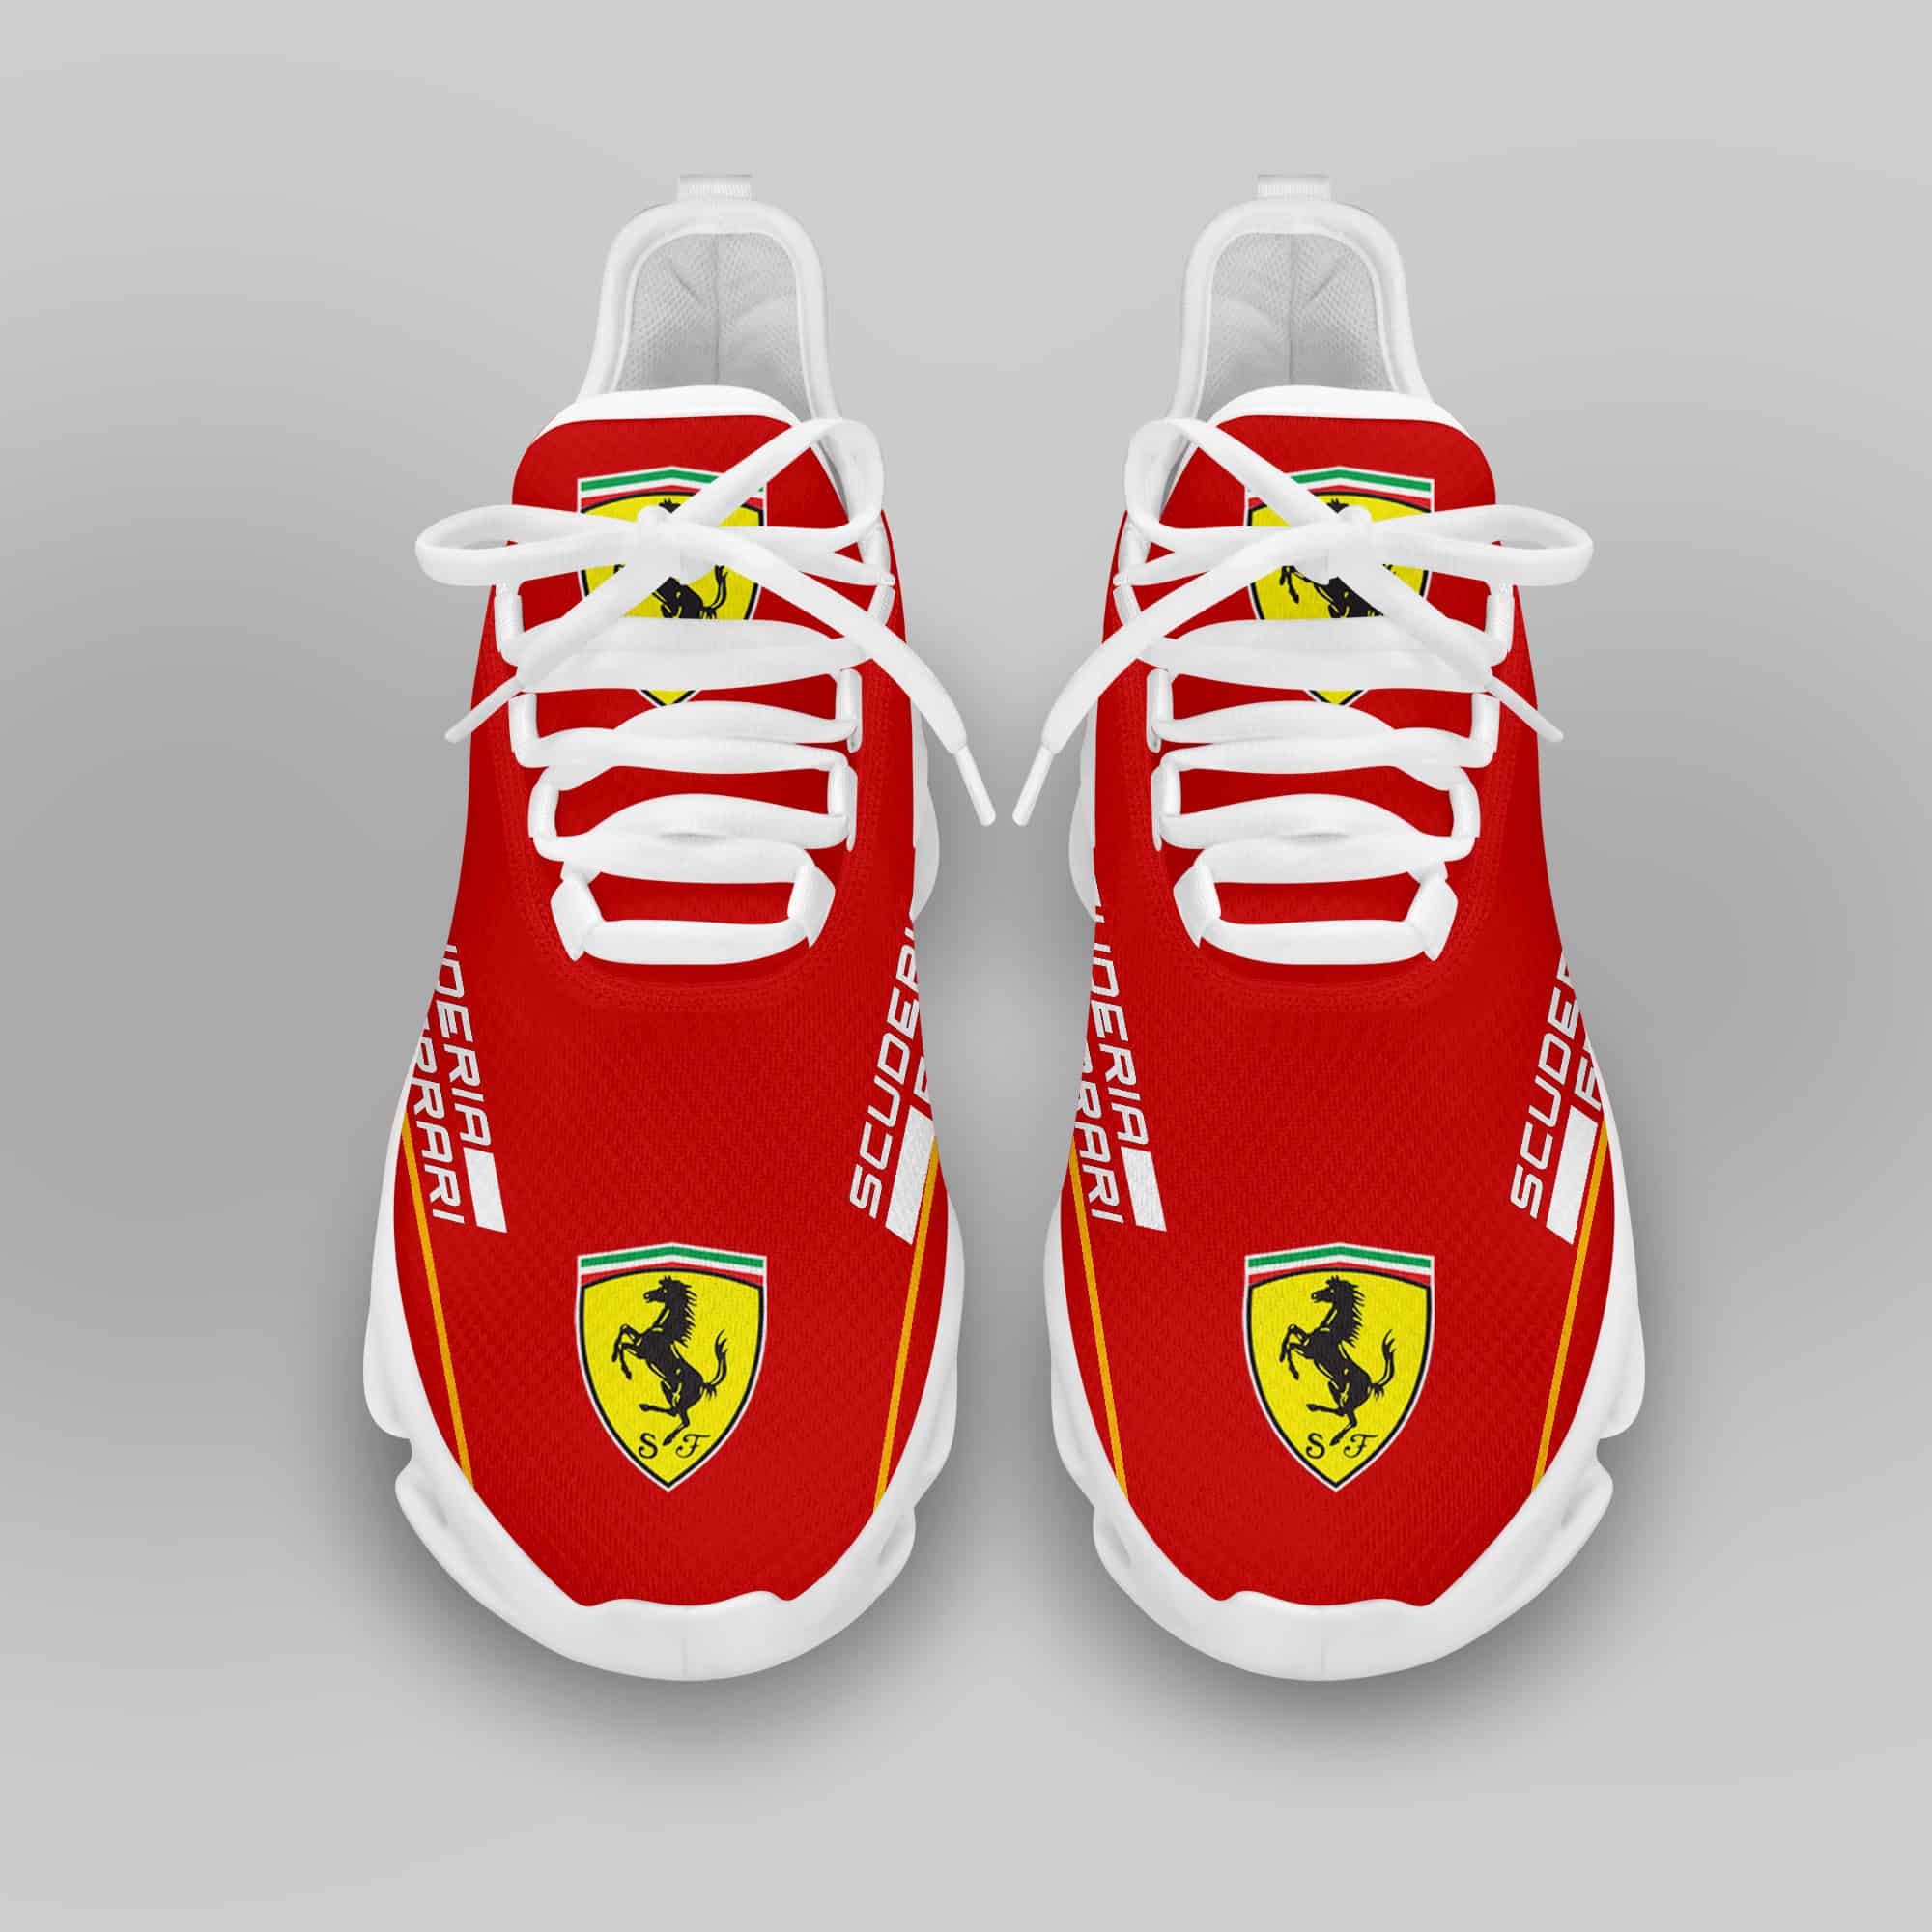 Ferrari Sneaker Running Shoes Max Soul Shoes Sneakers Ver 15 3